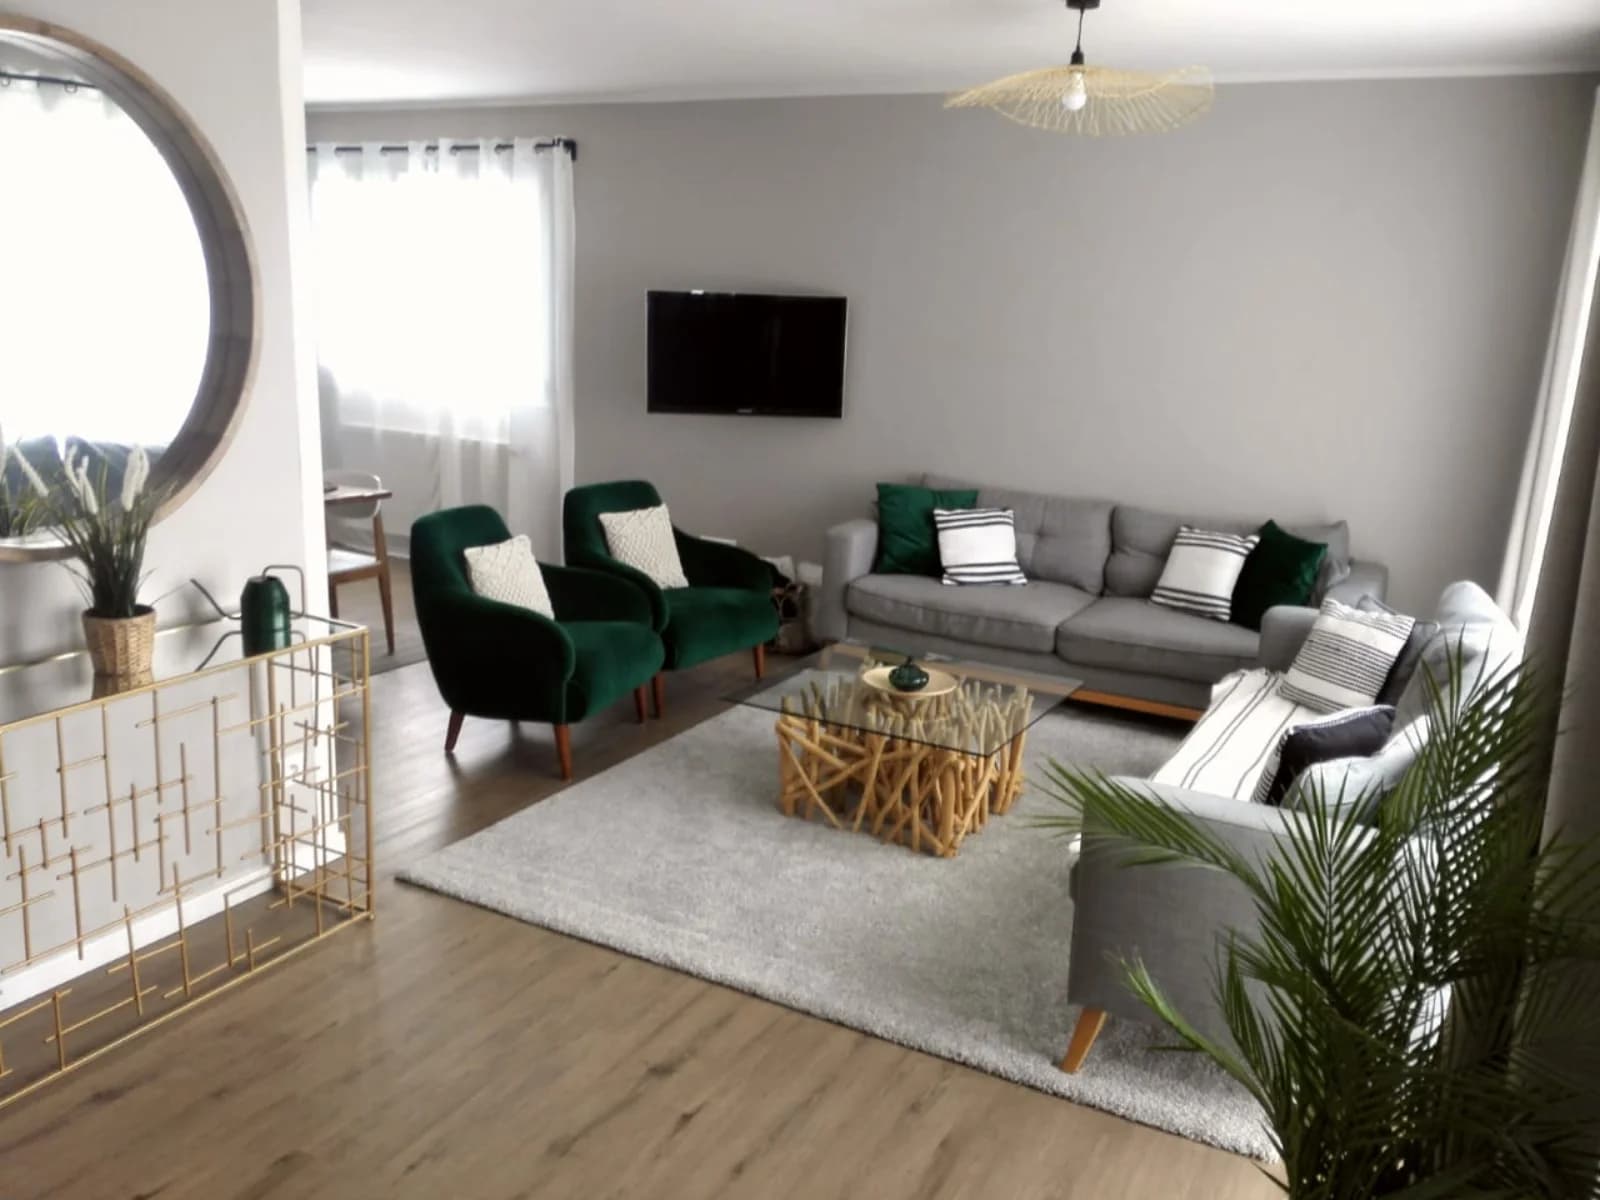 Living room in House Piscine intérieure luxe near Paris - 0